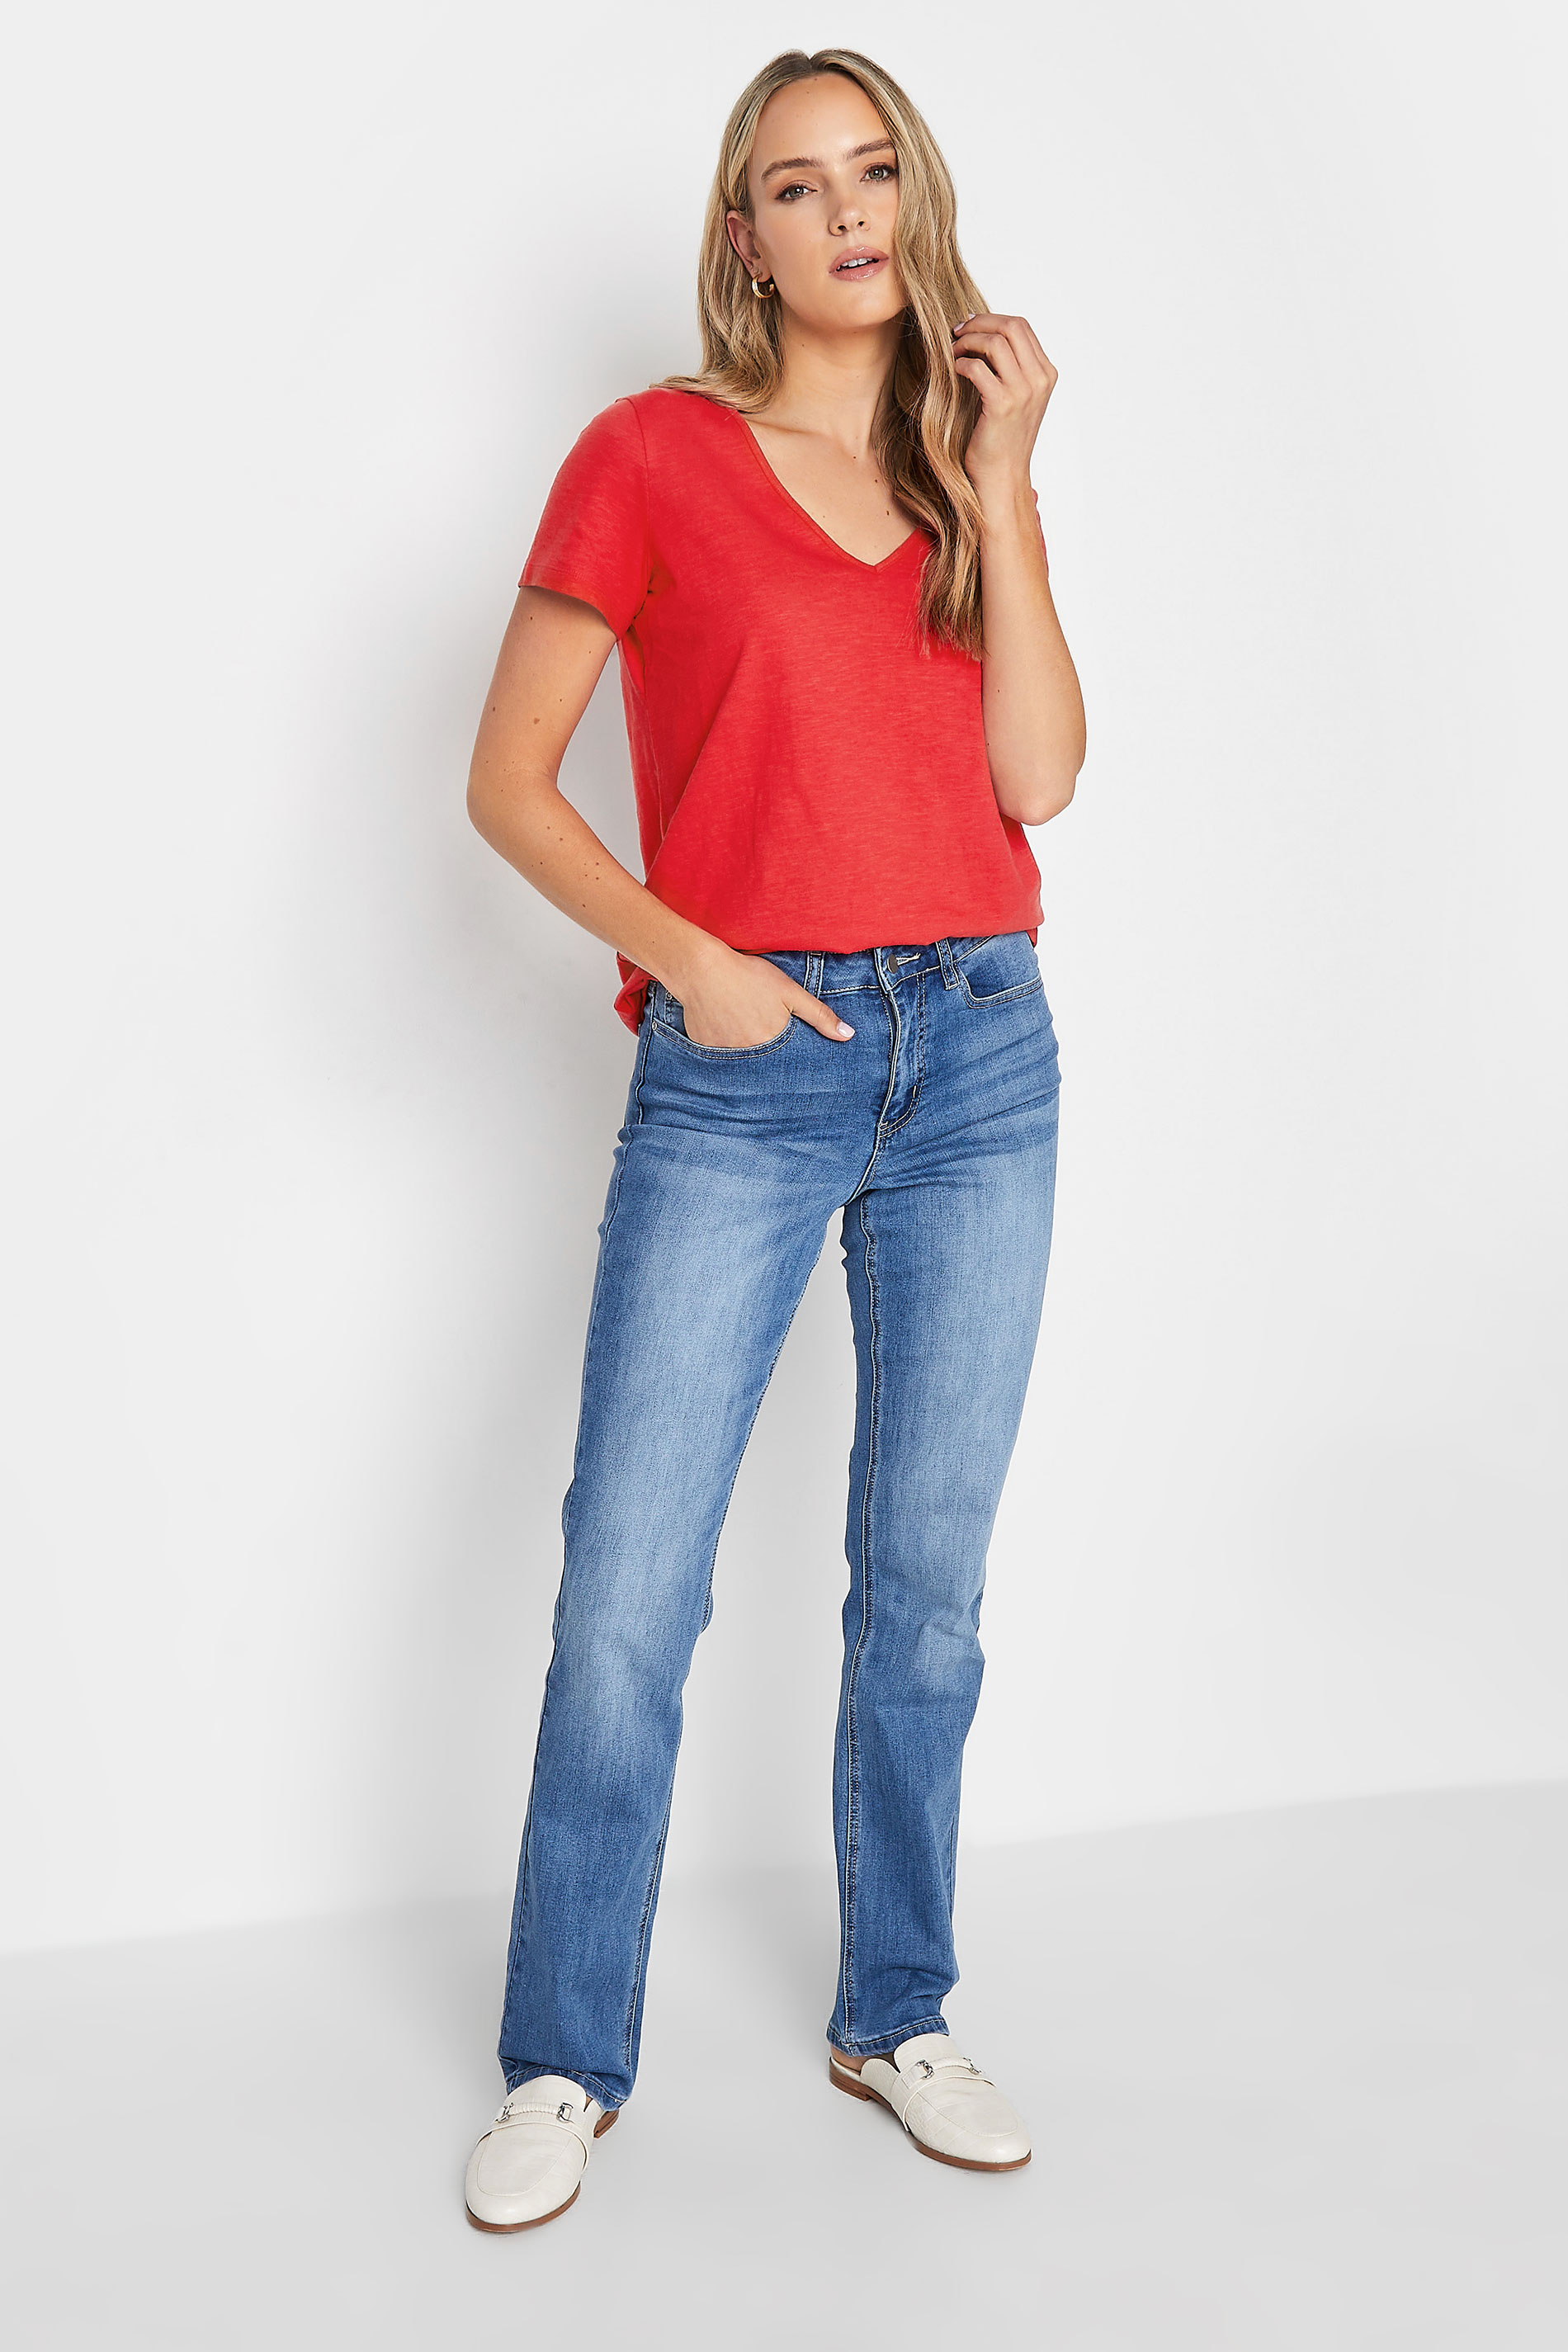 LTS Tall Women's Red V-Neck T-Shirt | Long Tall Sally 2